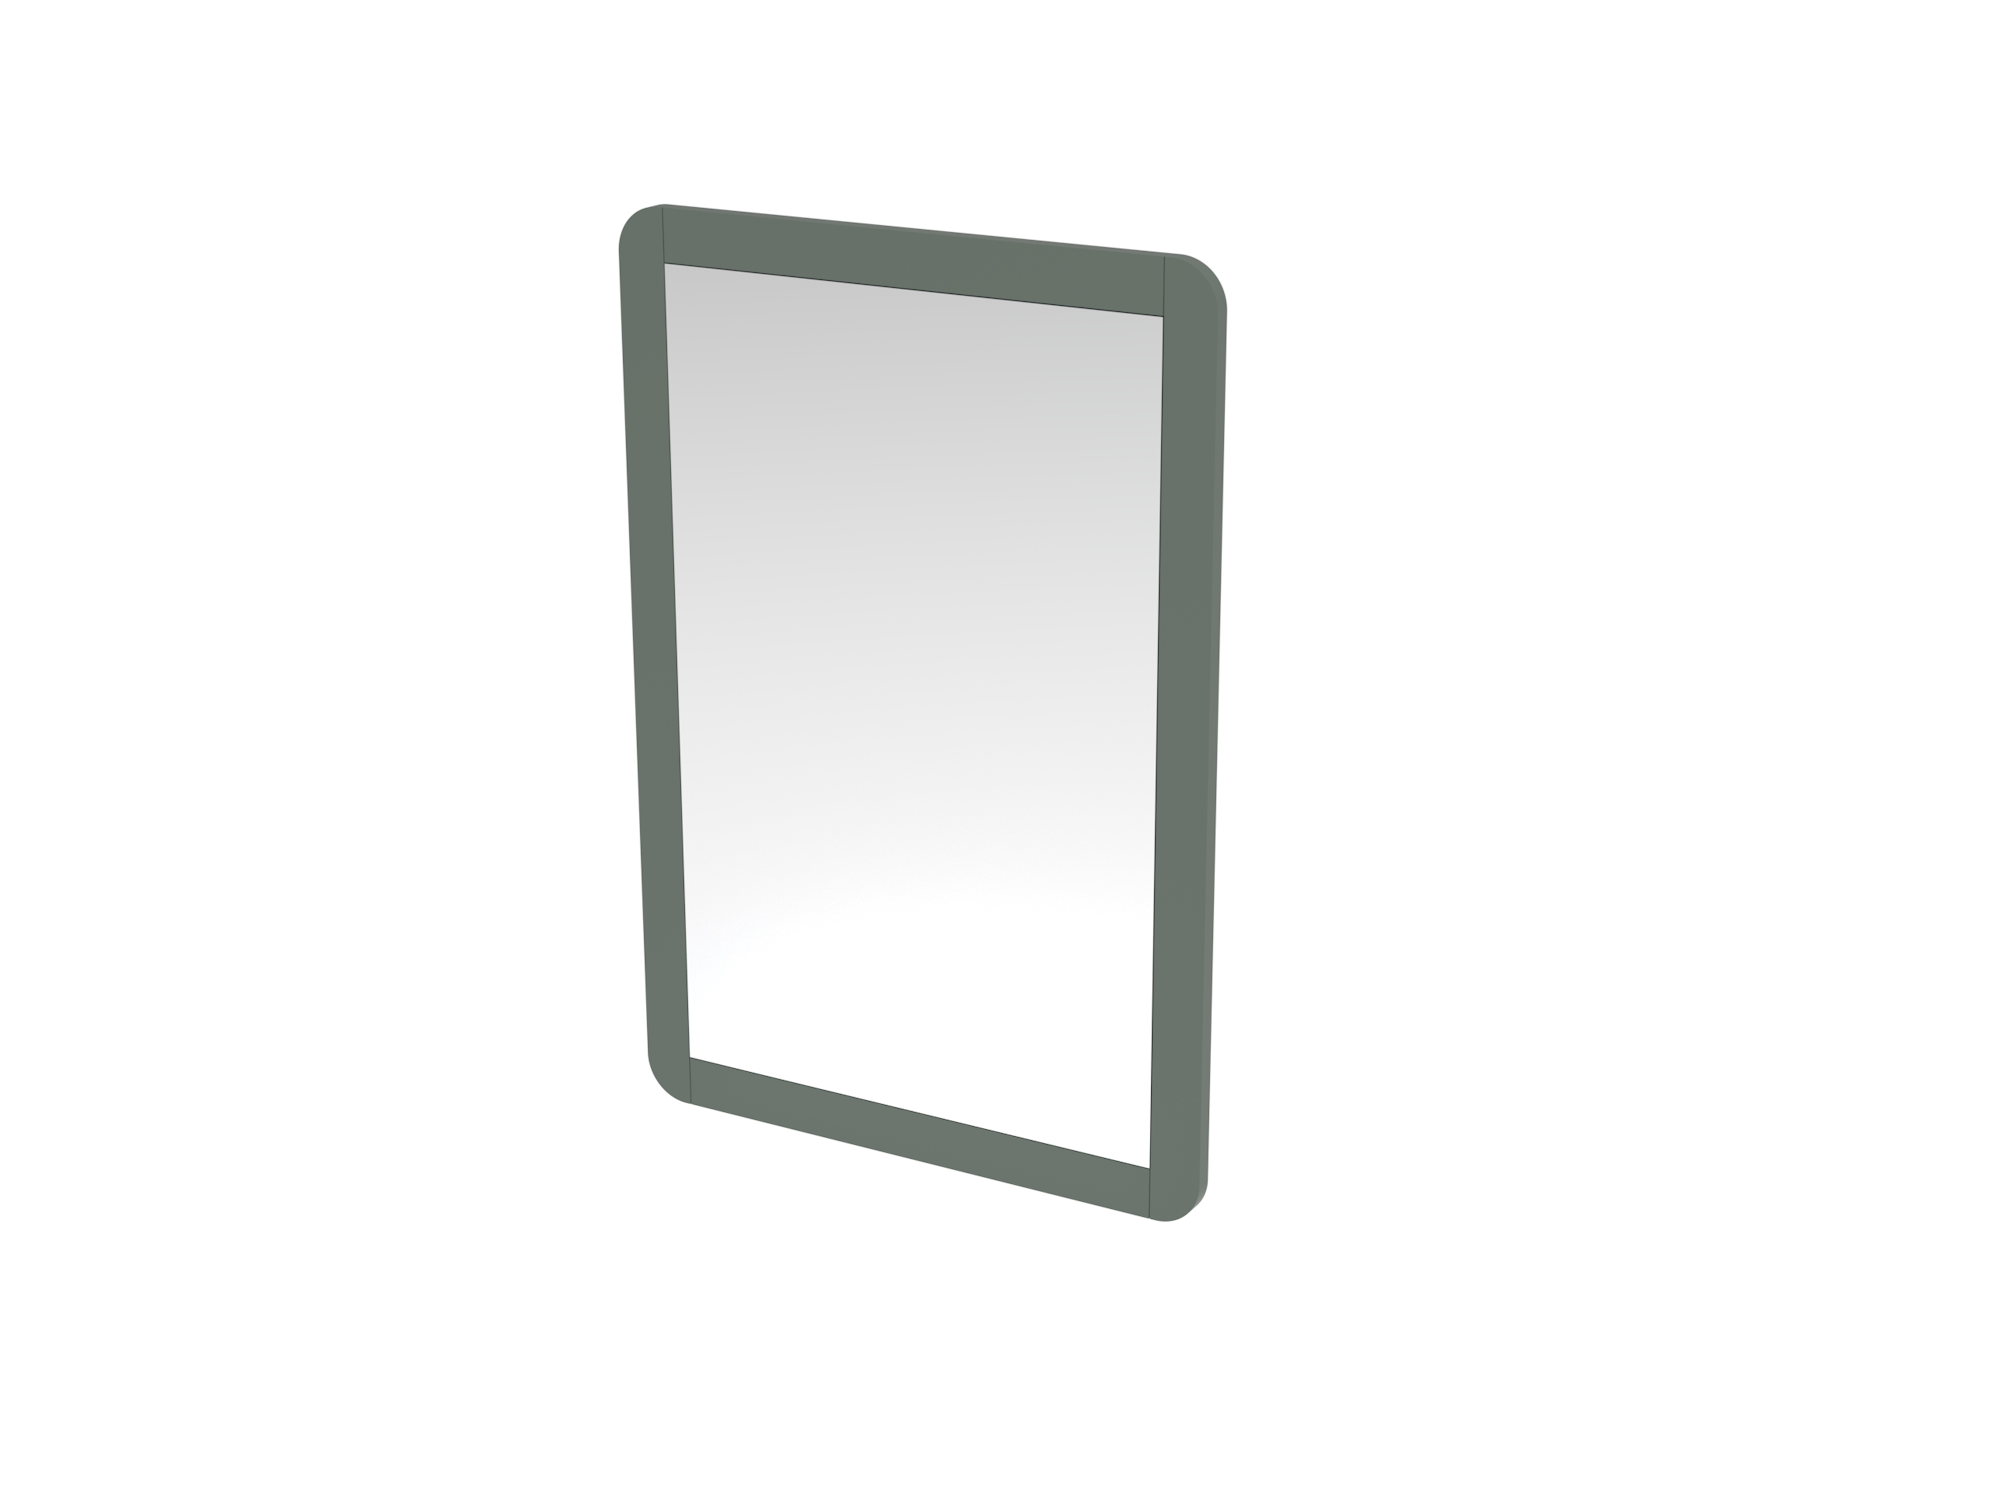 HYDE 55cm 1 door recessed electric mirror cabinet (LH) - Matte Sage